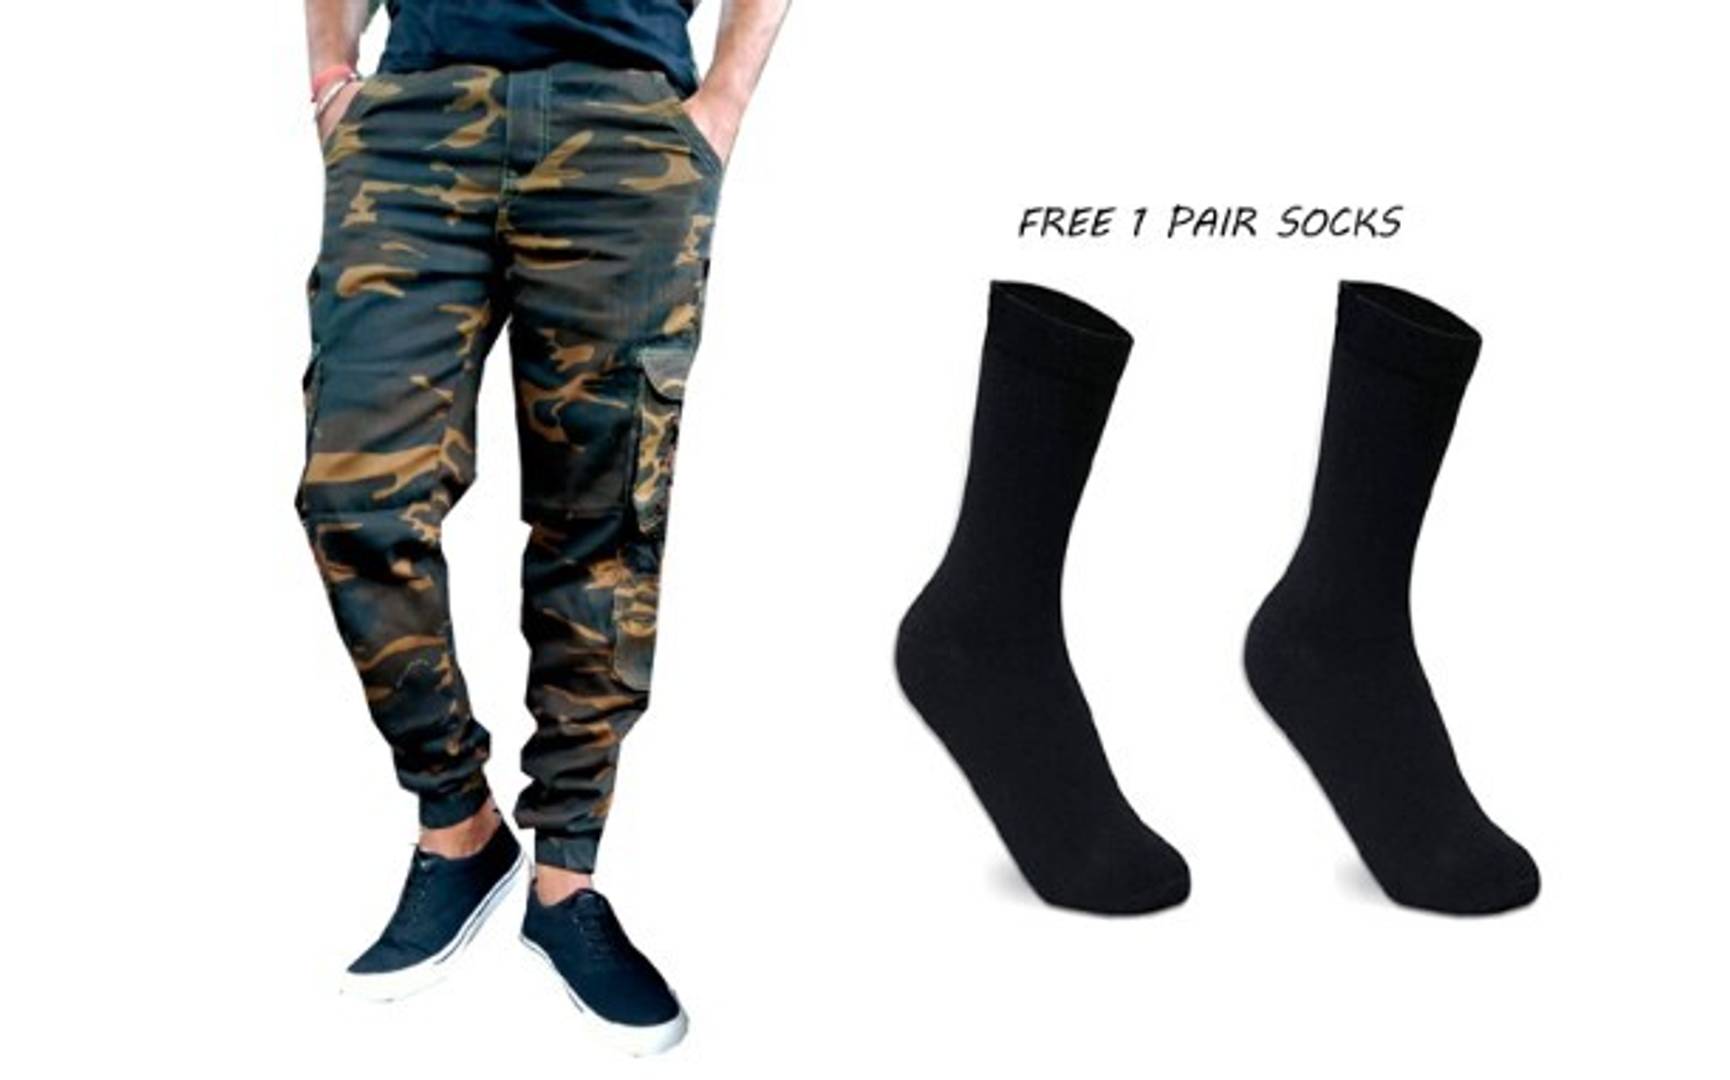 Free socks with Men's fashion trendy cargo pants